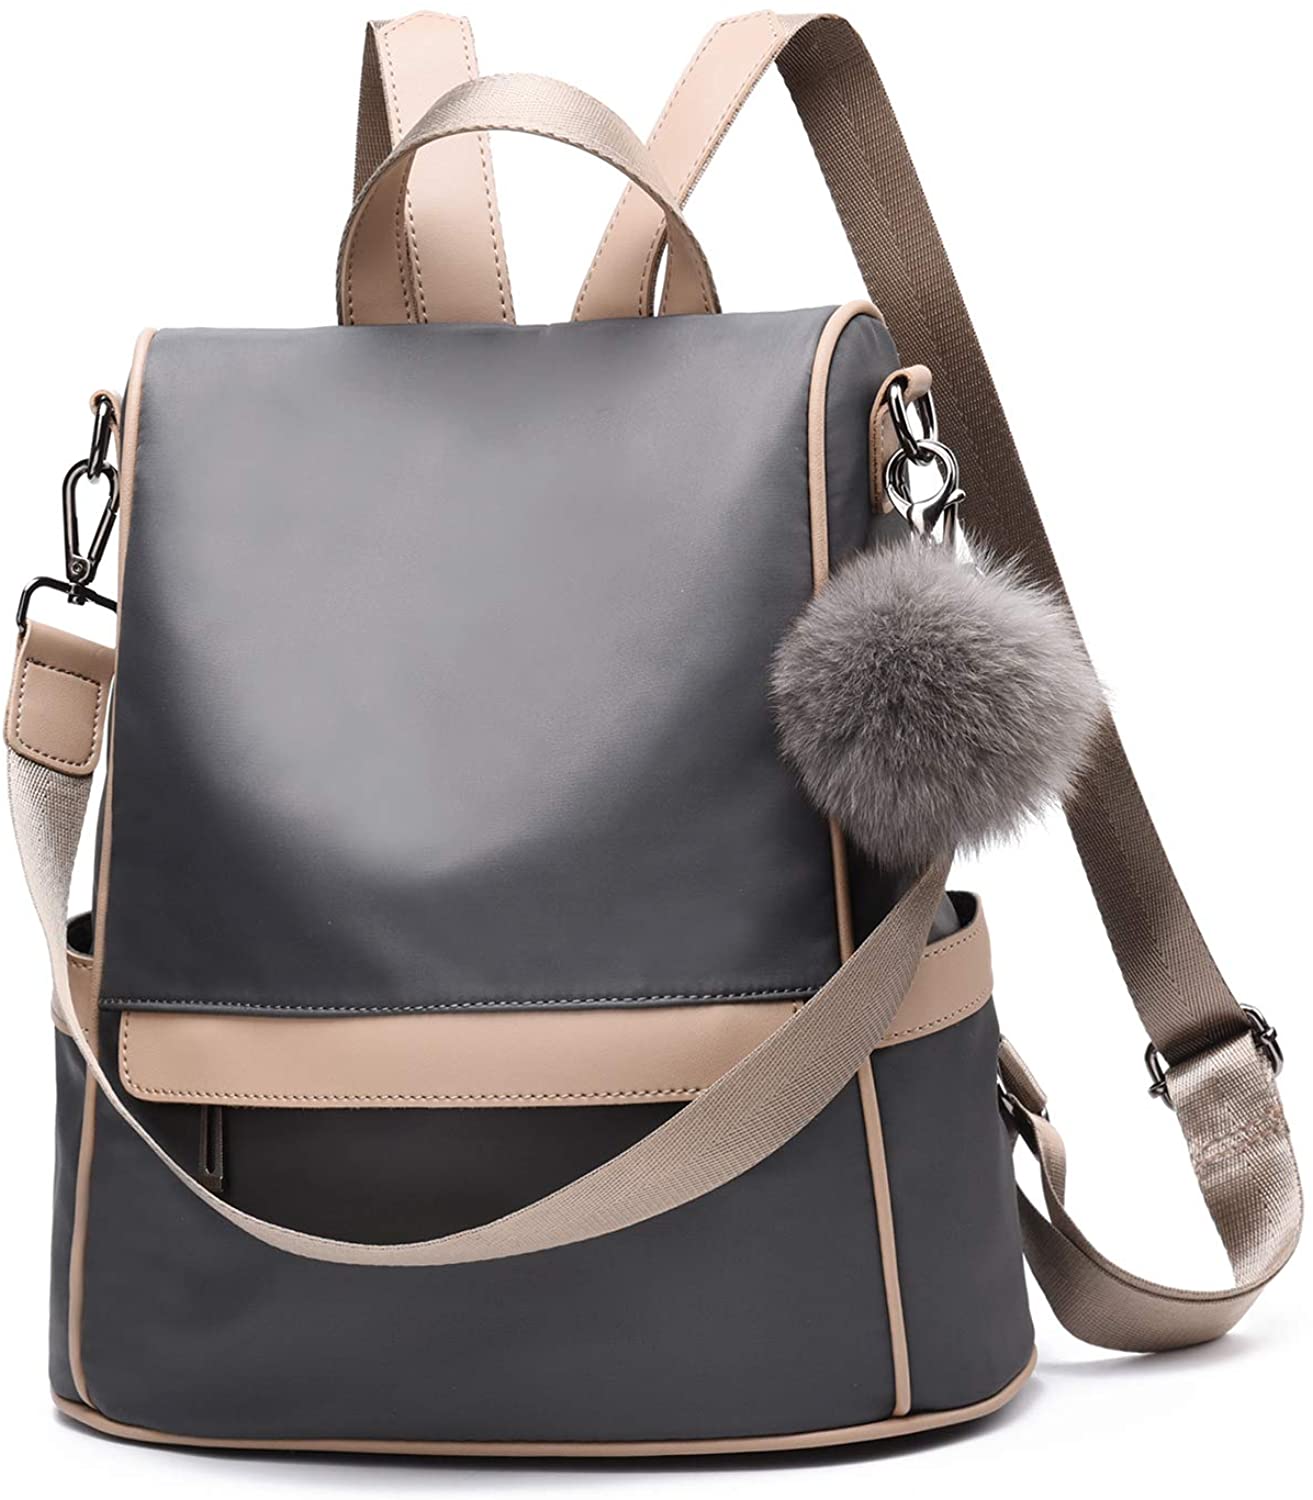 Women Backpack Purse Nylon Anti-theft Fashion Casual Lightweight Travel School Shoulder Bag 